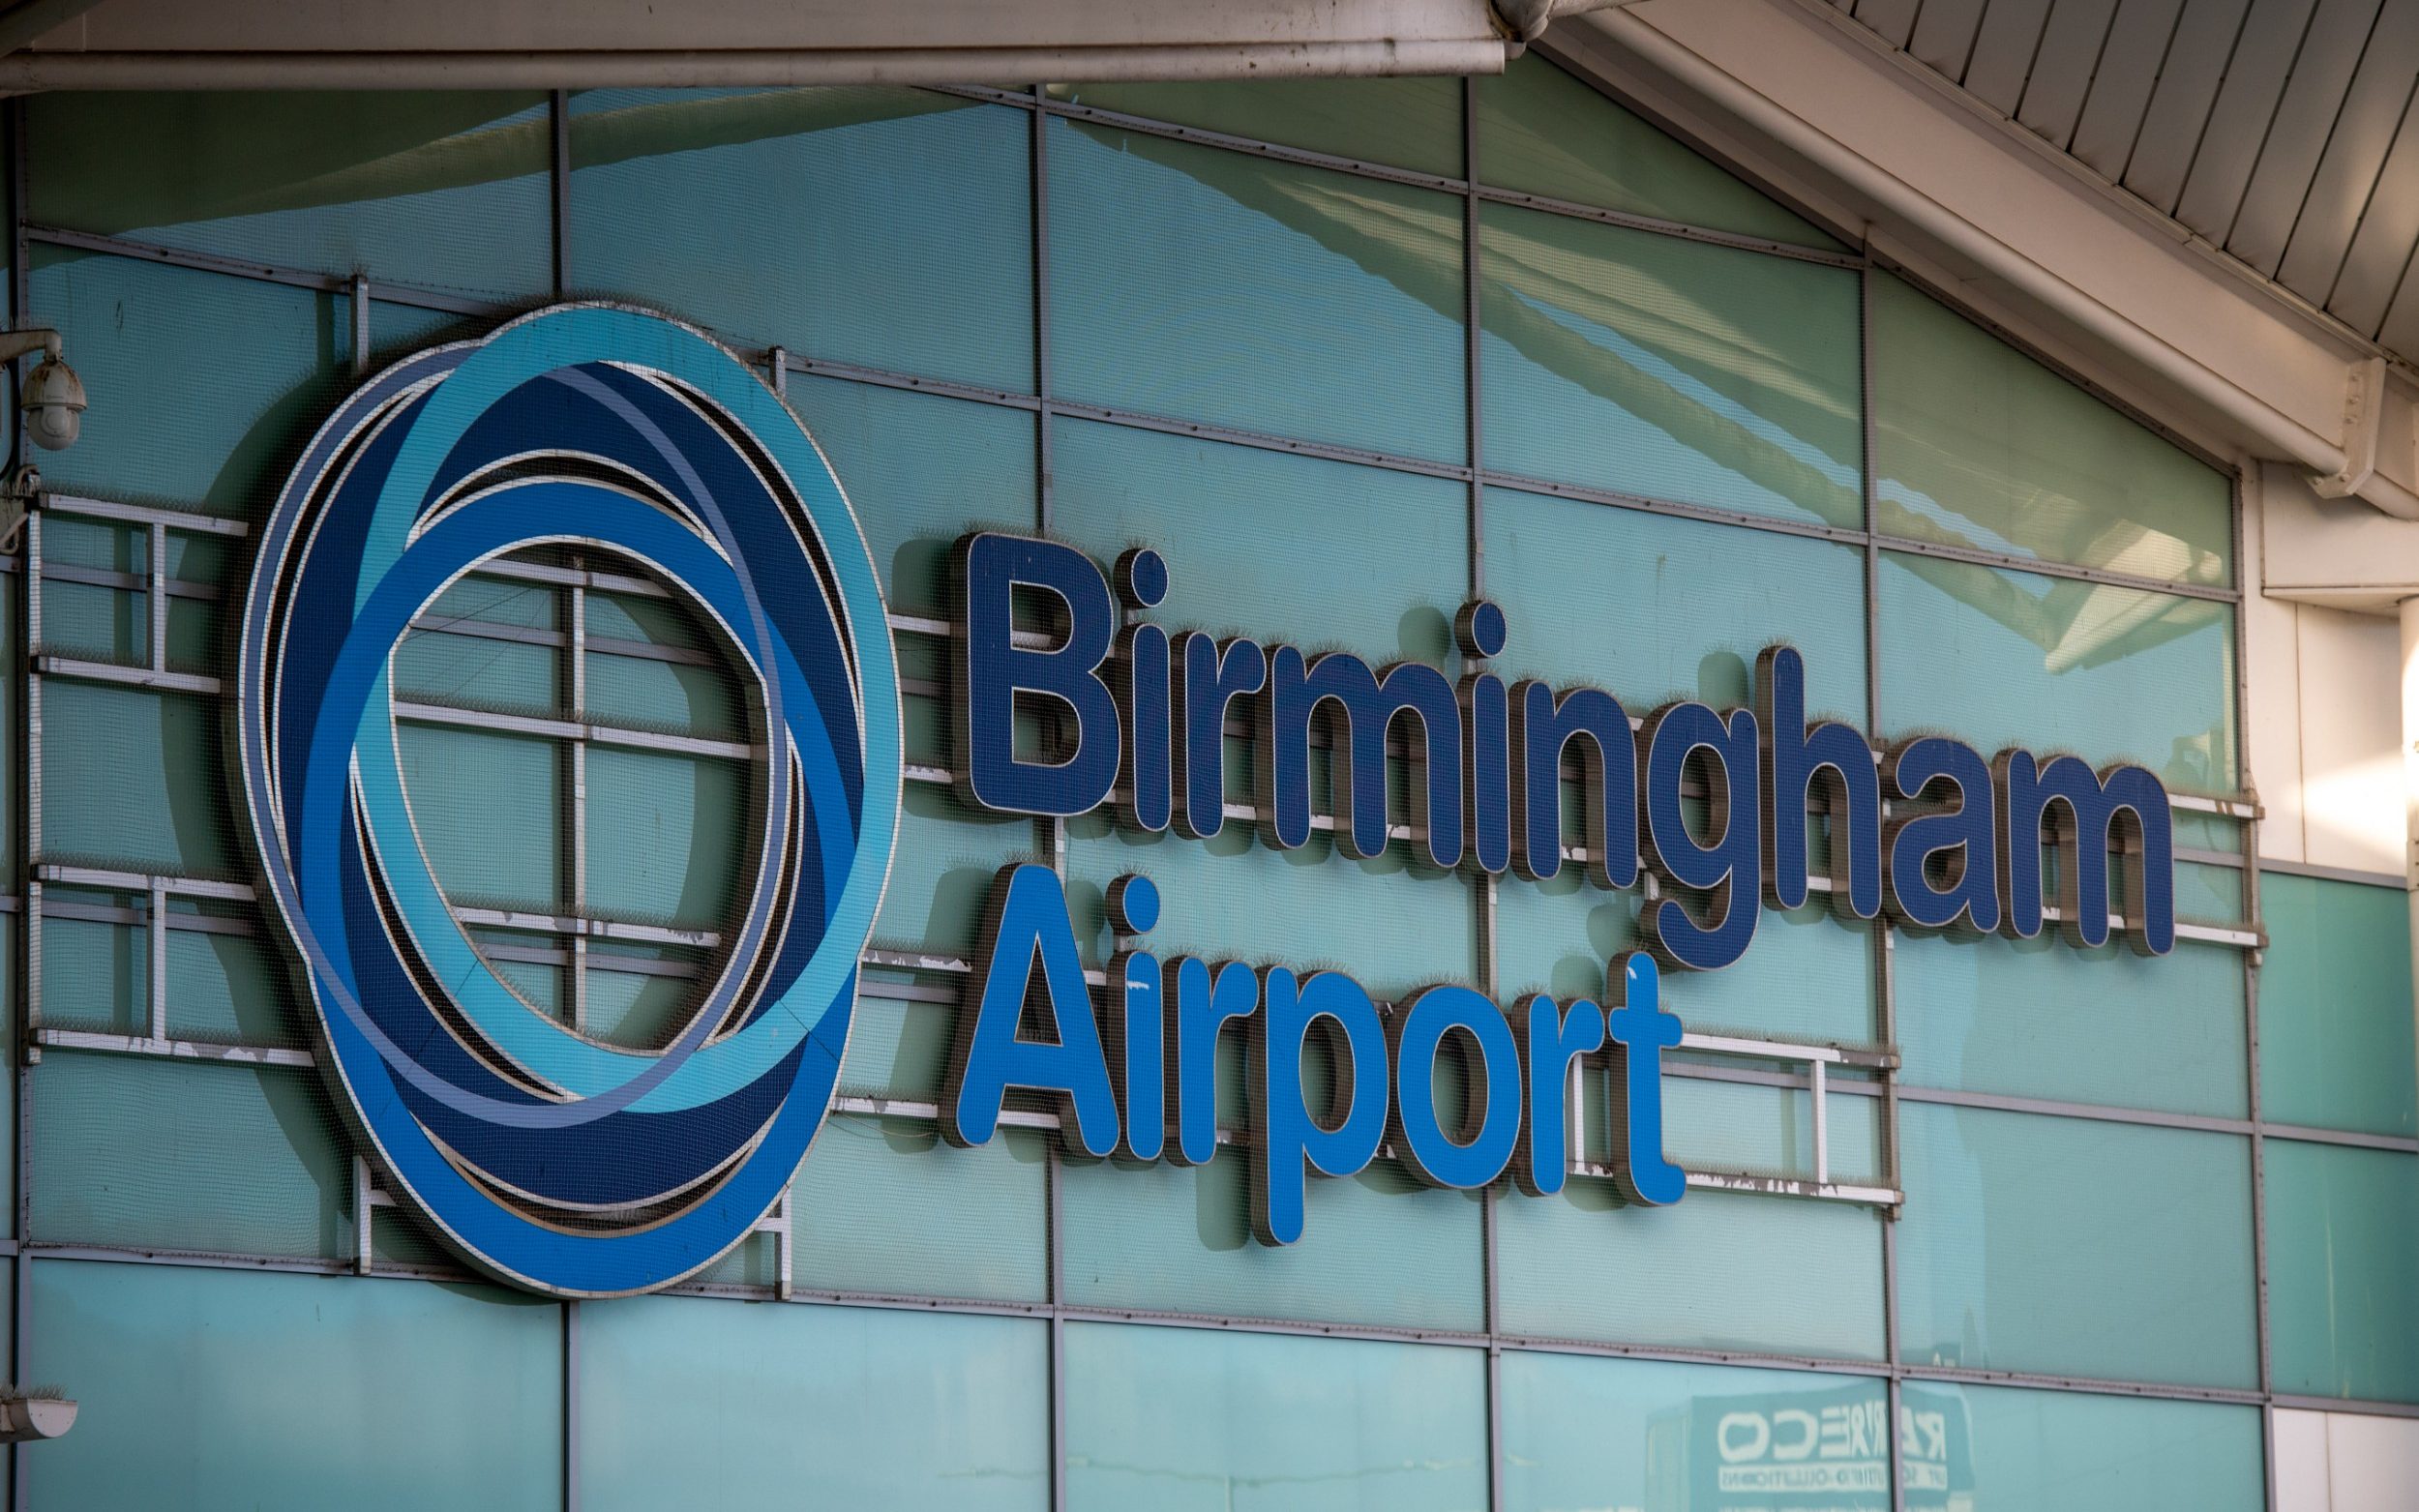 birmingham airport reopens after suspending flights because of ‘suspicious item’